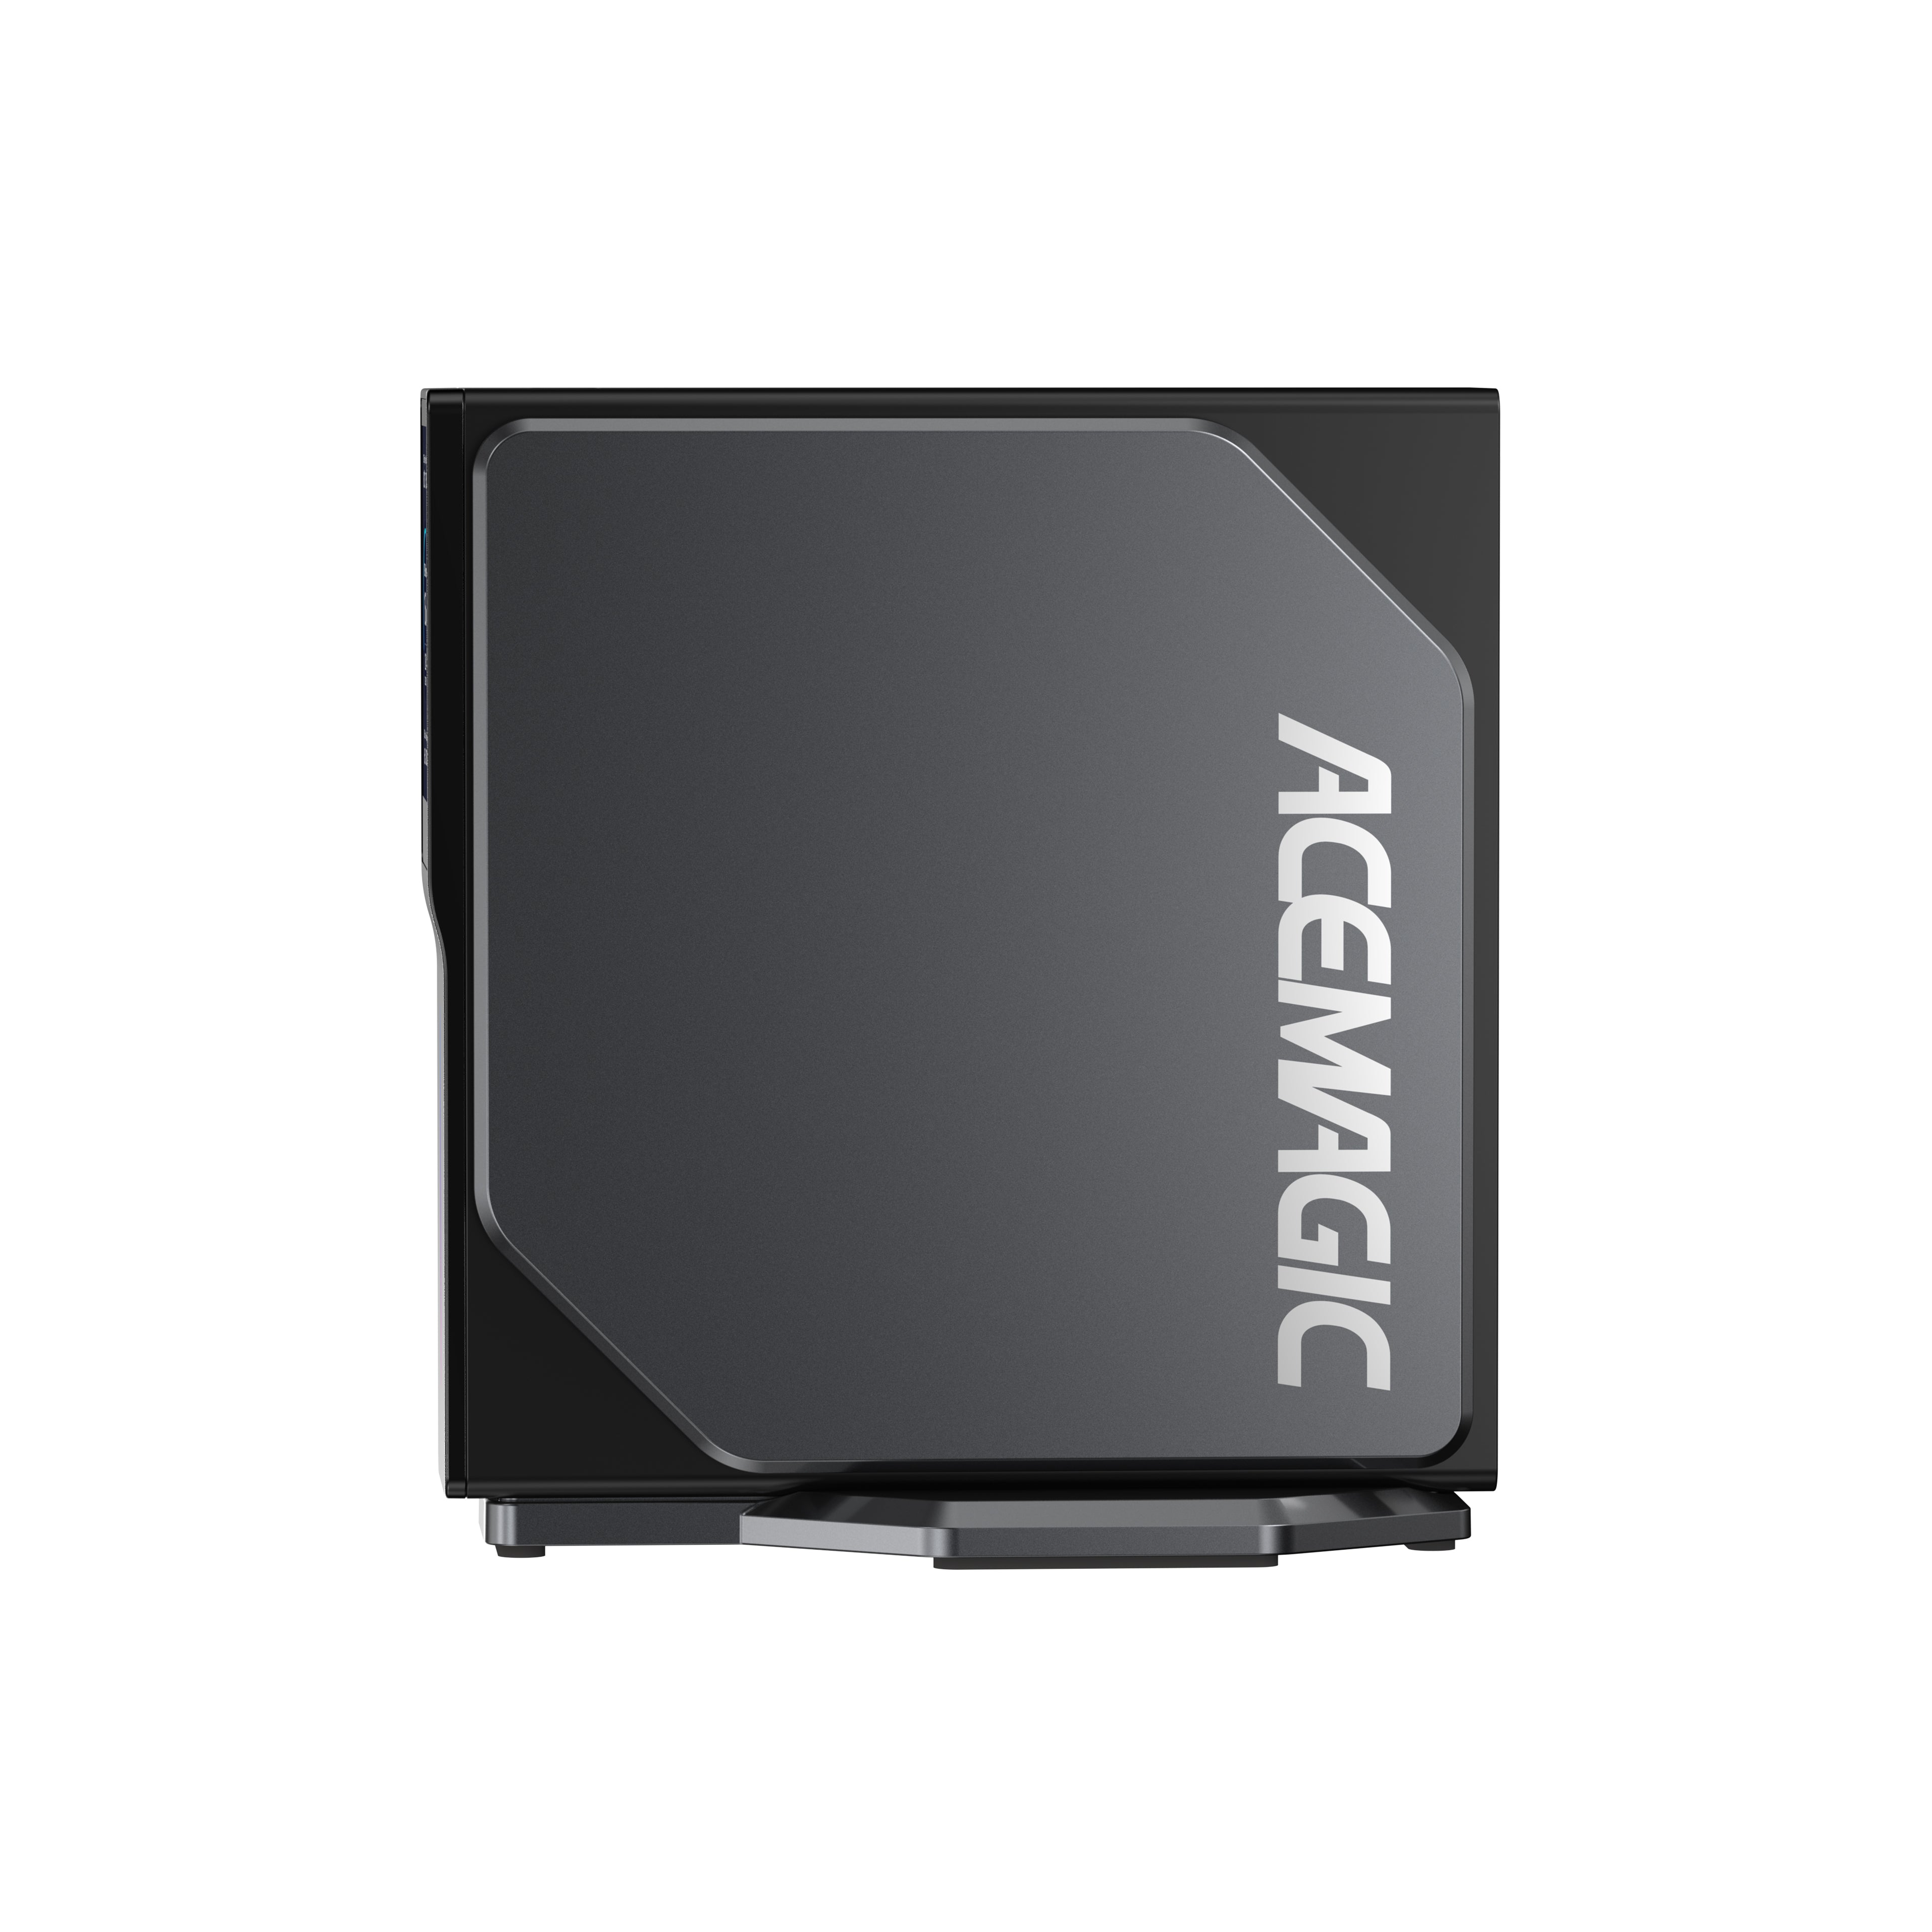 ACEMAGIC S1 Intel 12th Alder Laker N95 Mini PC